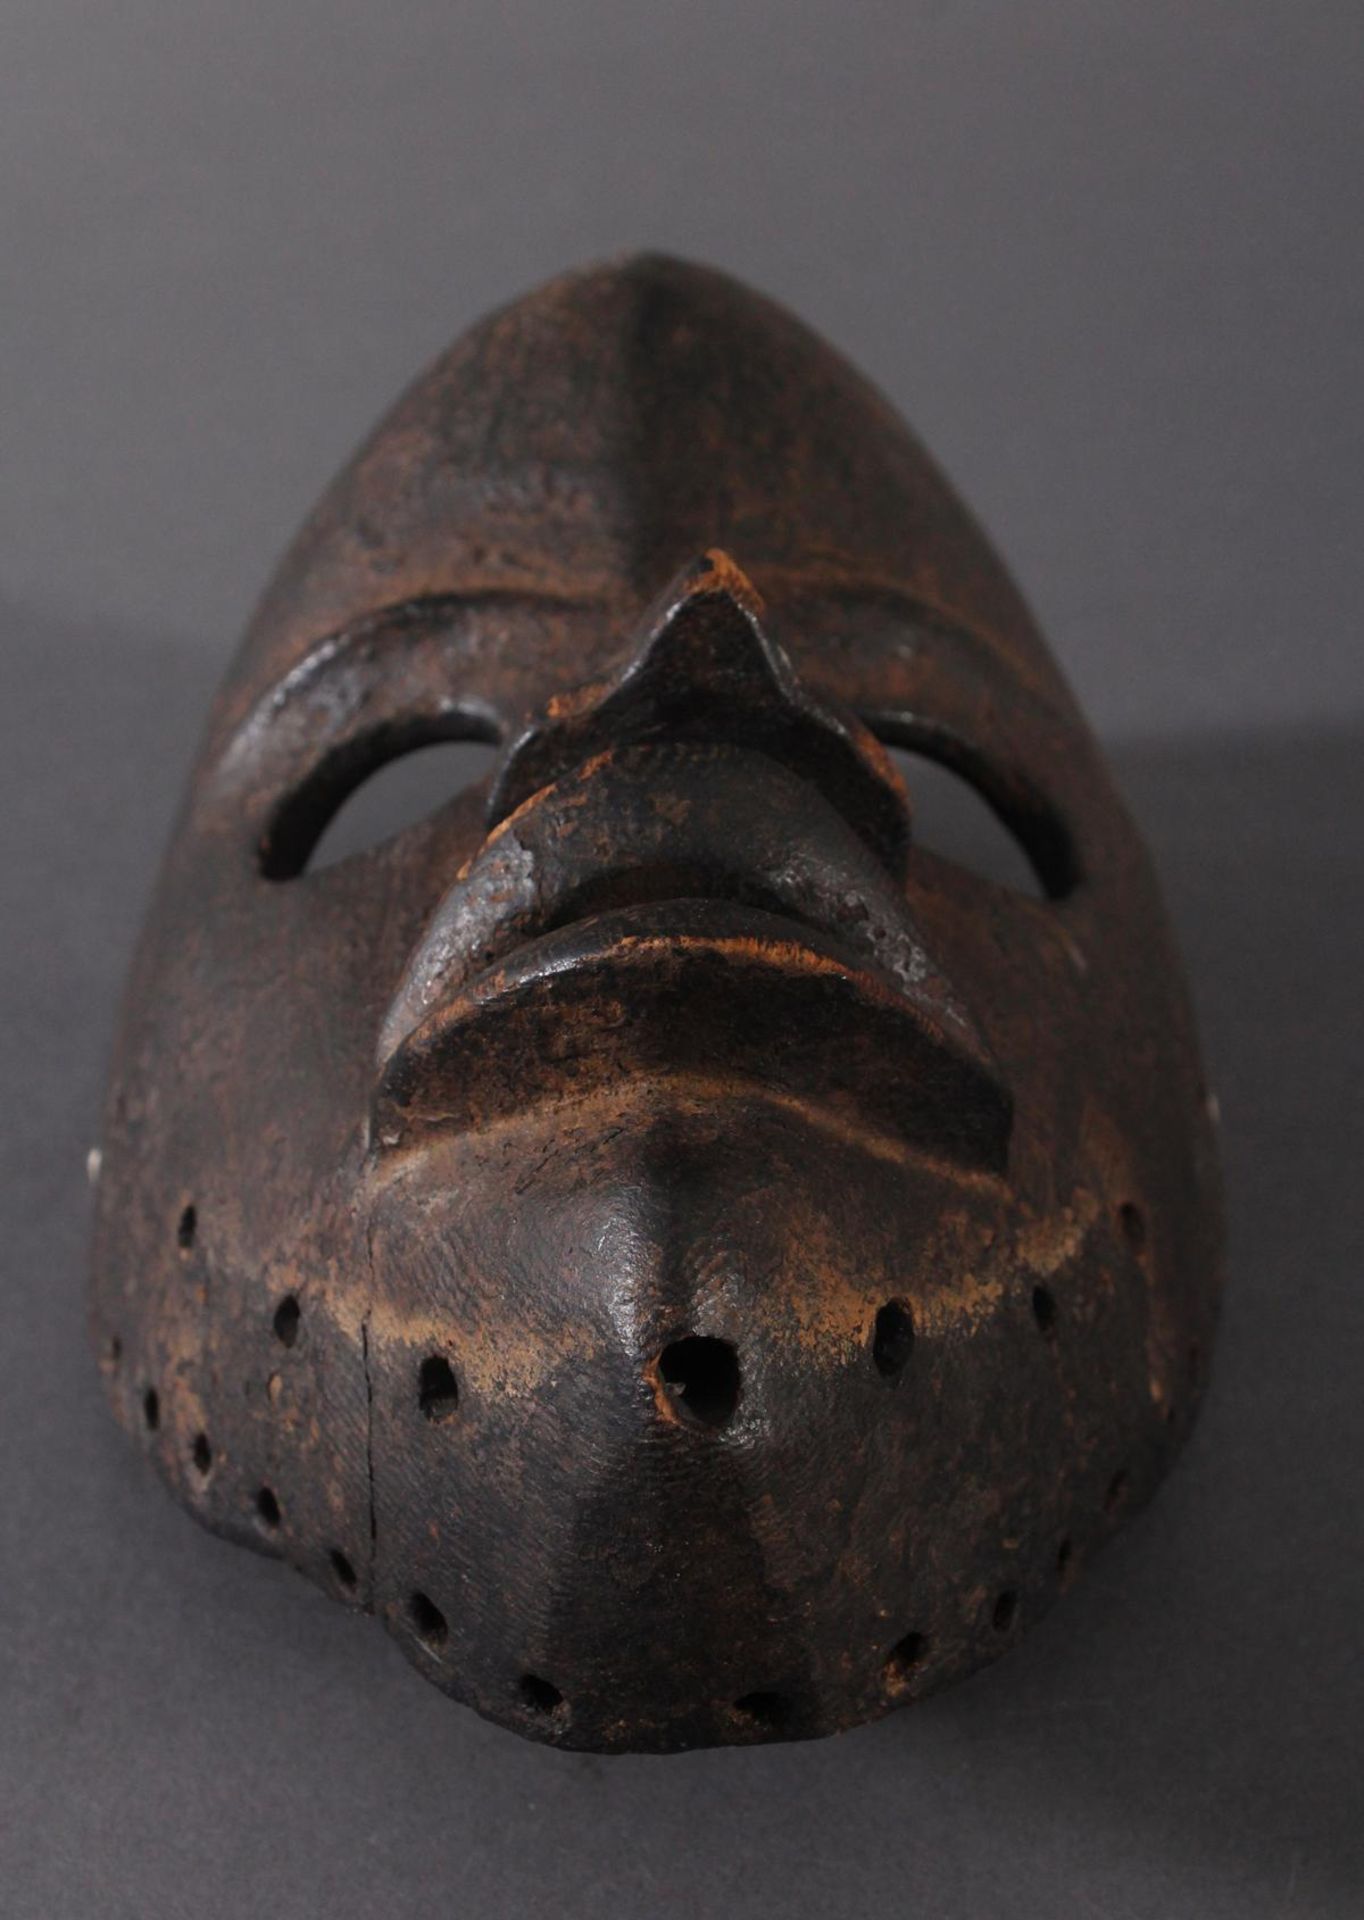 Antike Maske, Dan, Liberia. "Feuermelder", 1. Hälfte 20. Jh.Holz geschnitzt, dunkle Patina, - Bild 4 aus 6